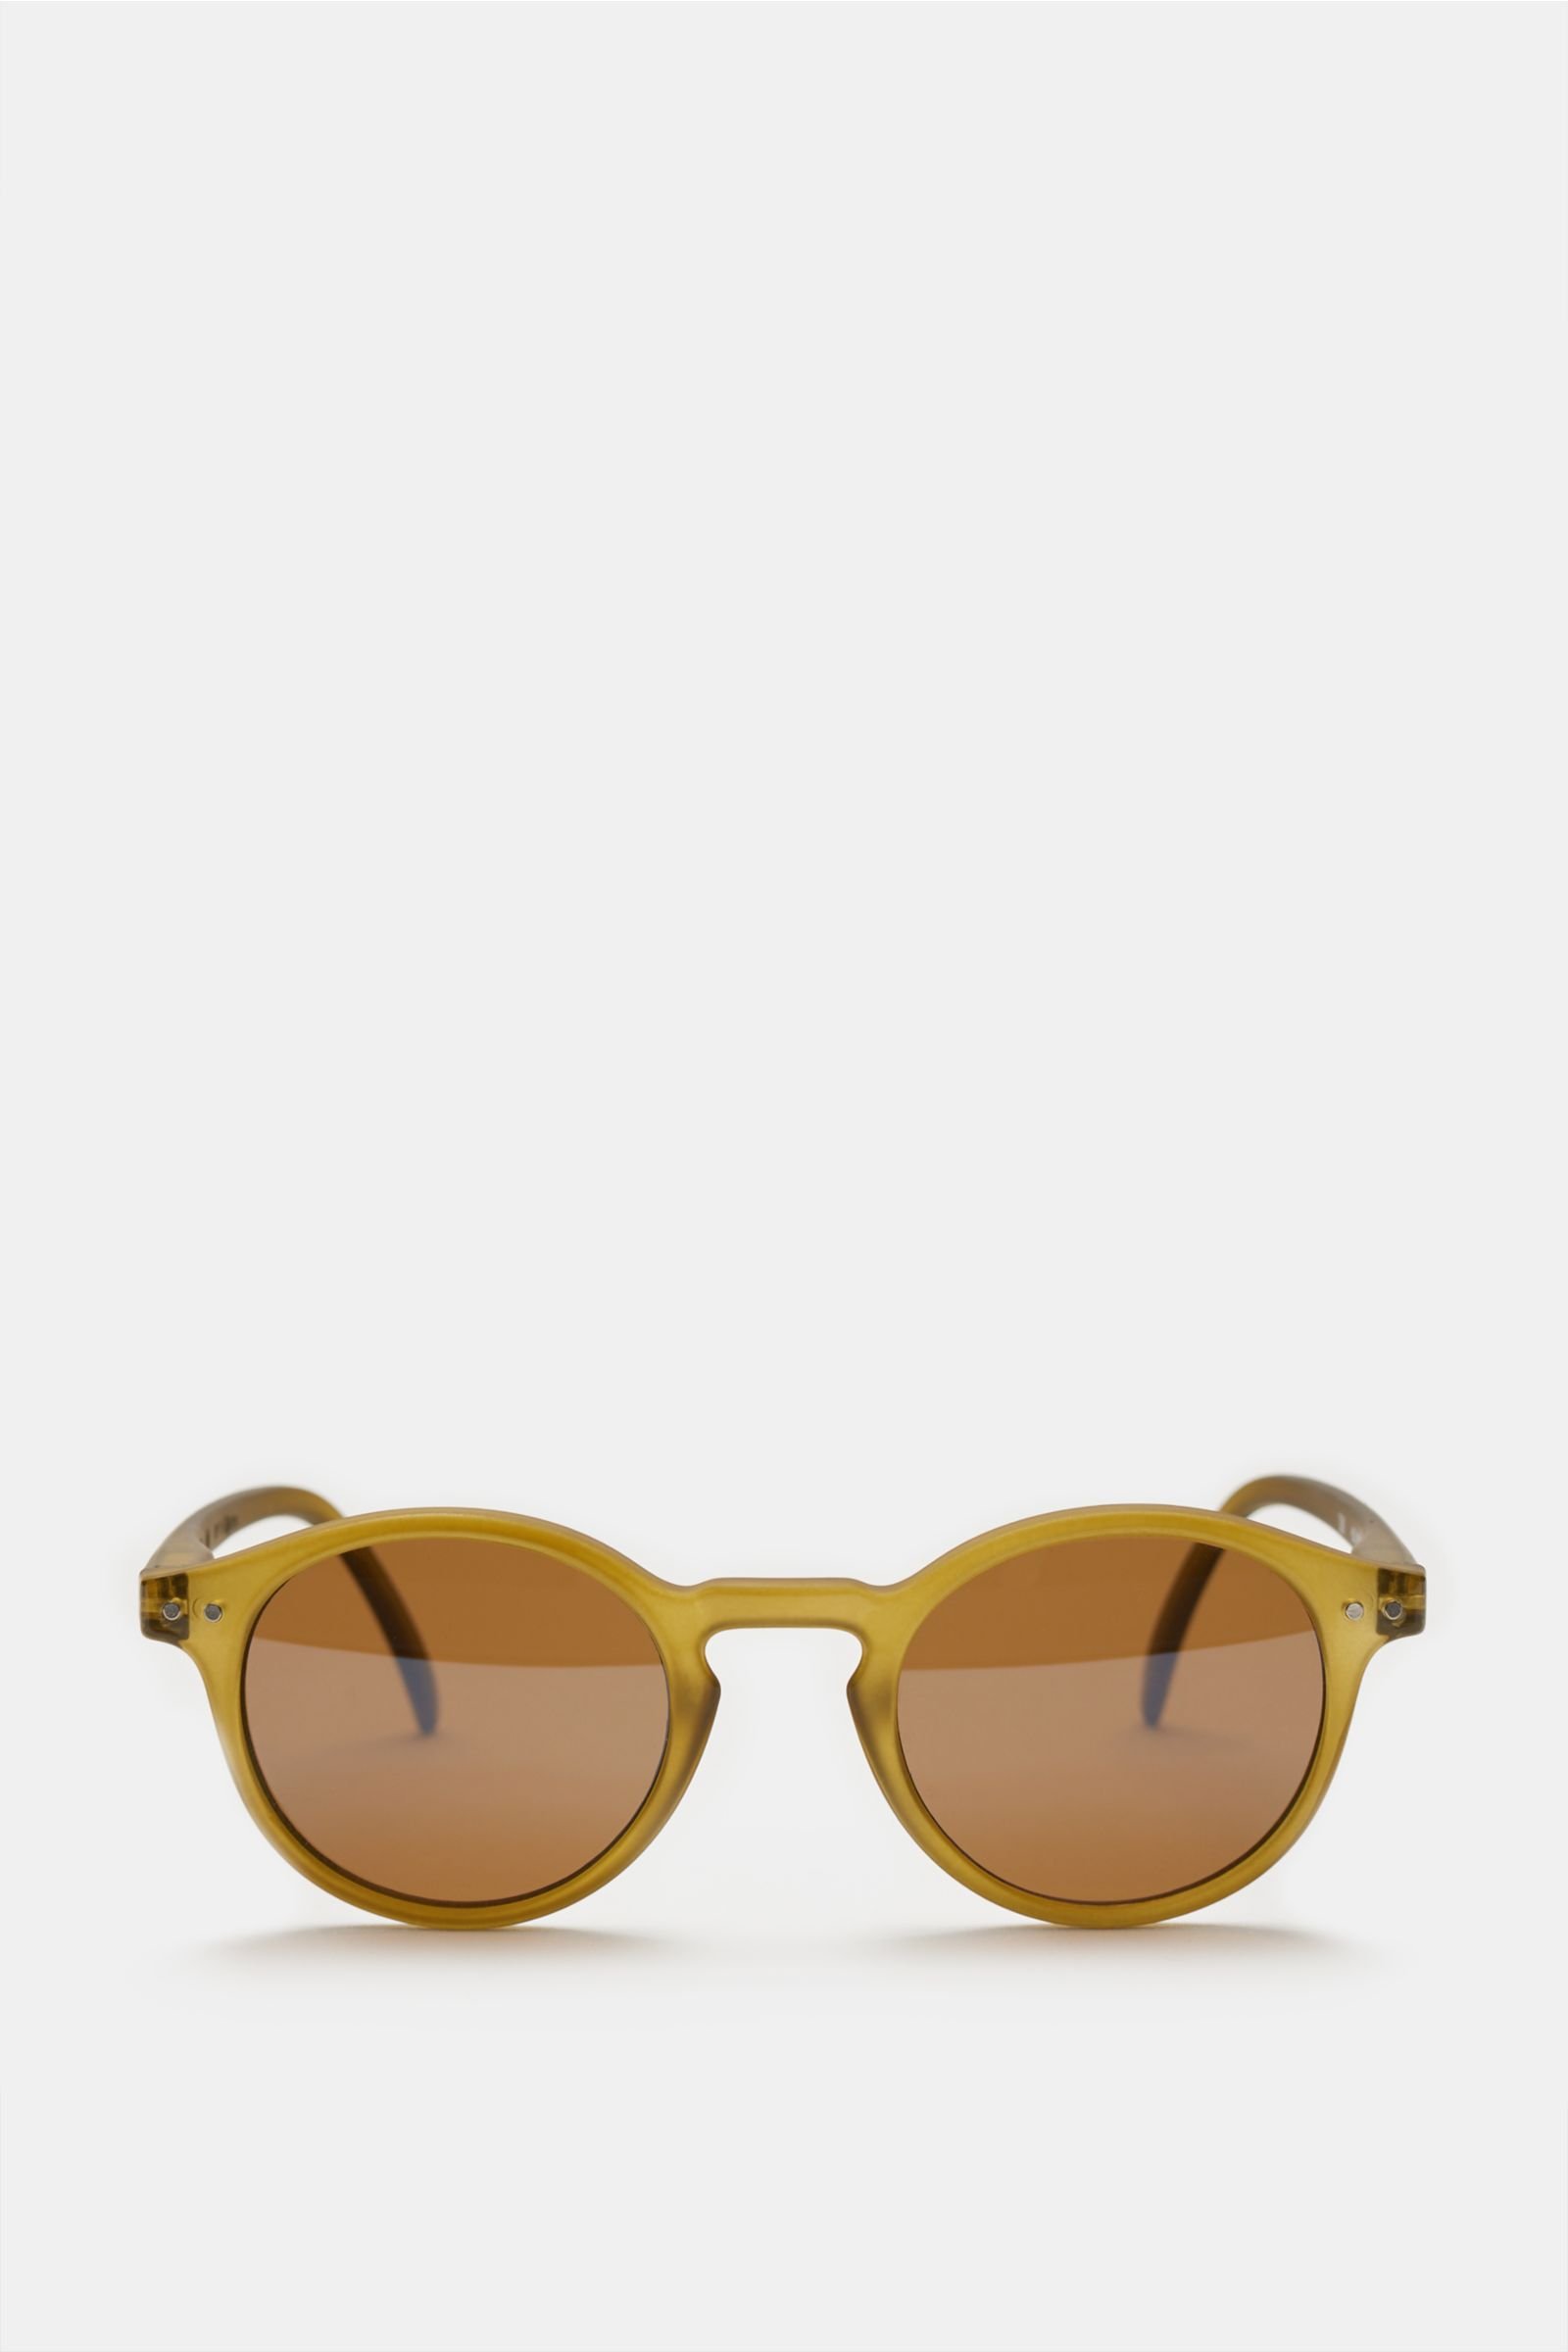 Sunglasses '#H Sun' olive